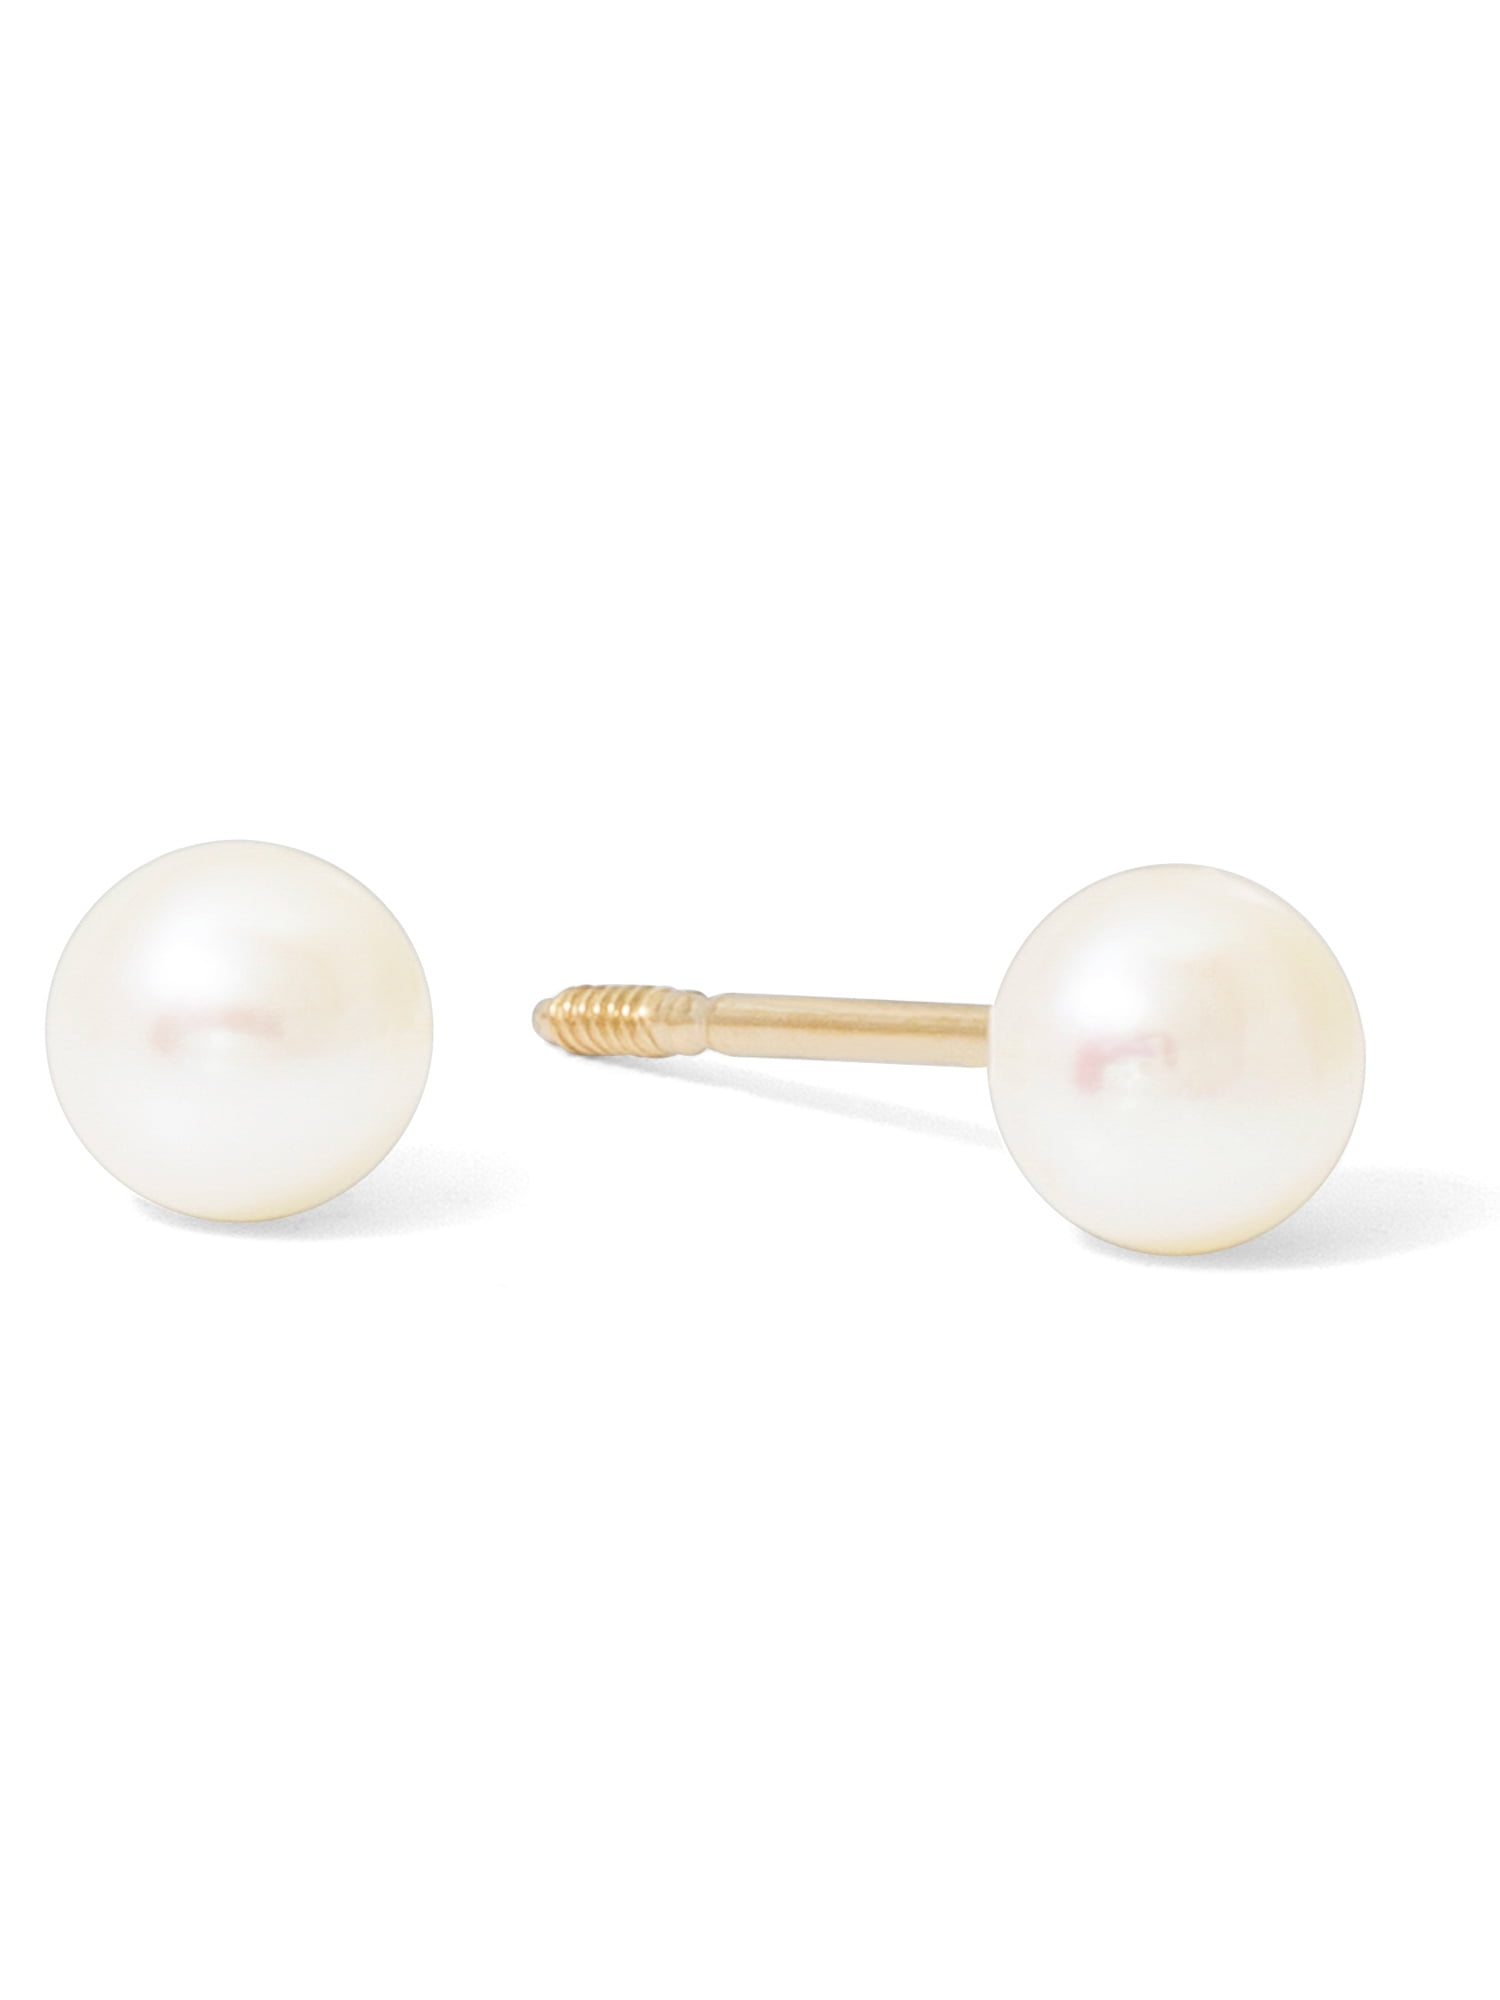 Handpicked Round Freshwater Cultured White Pearl Stud Earrings for Women Girls JORA 14K Gold AAA 